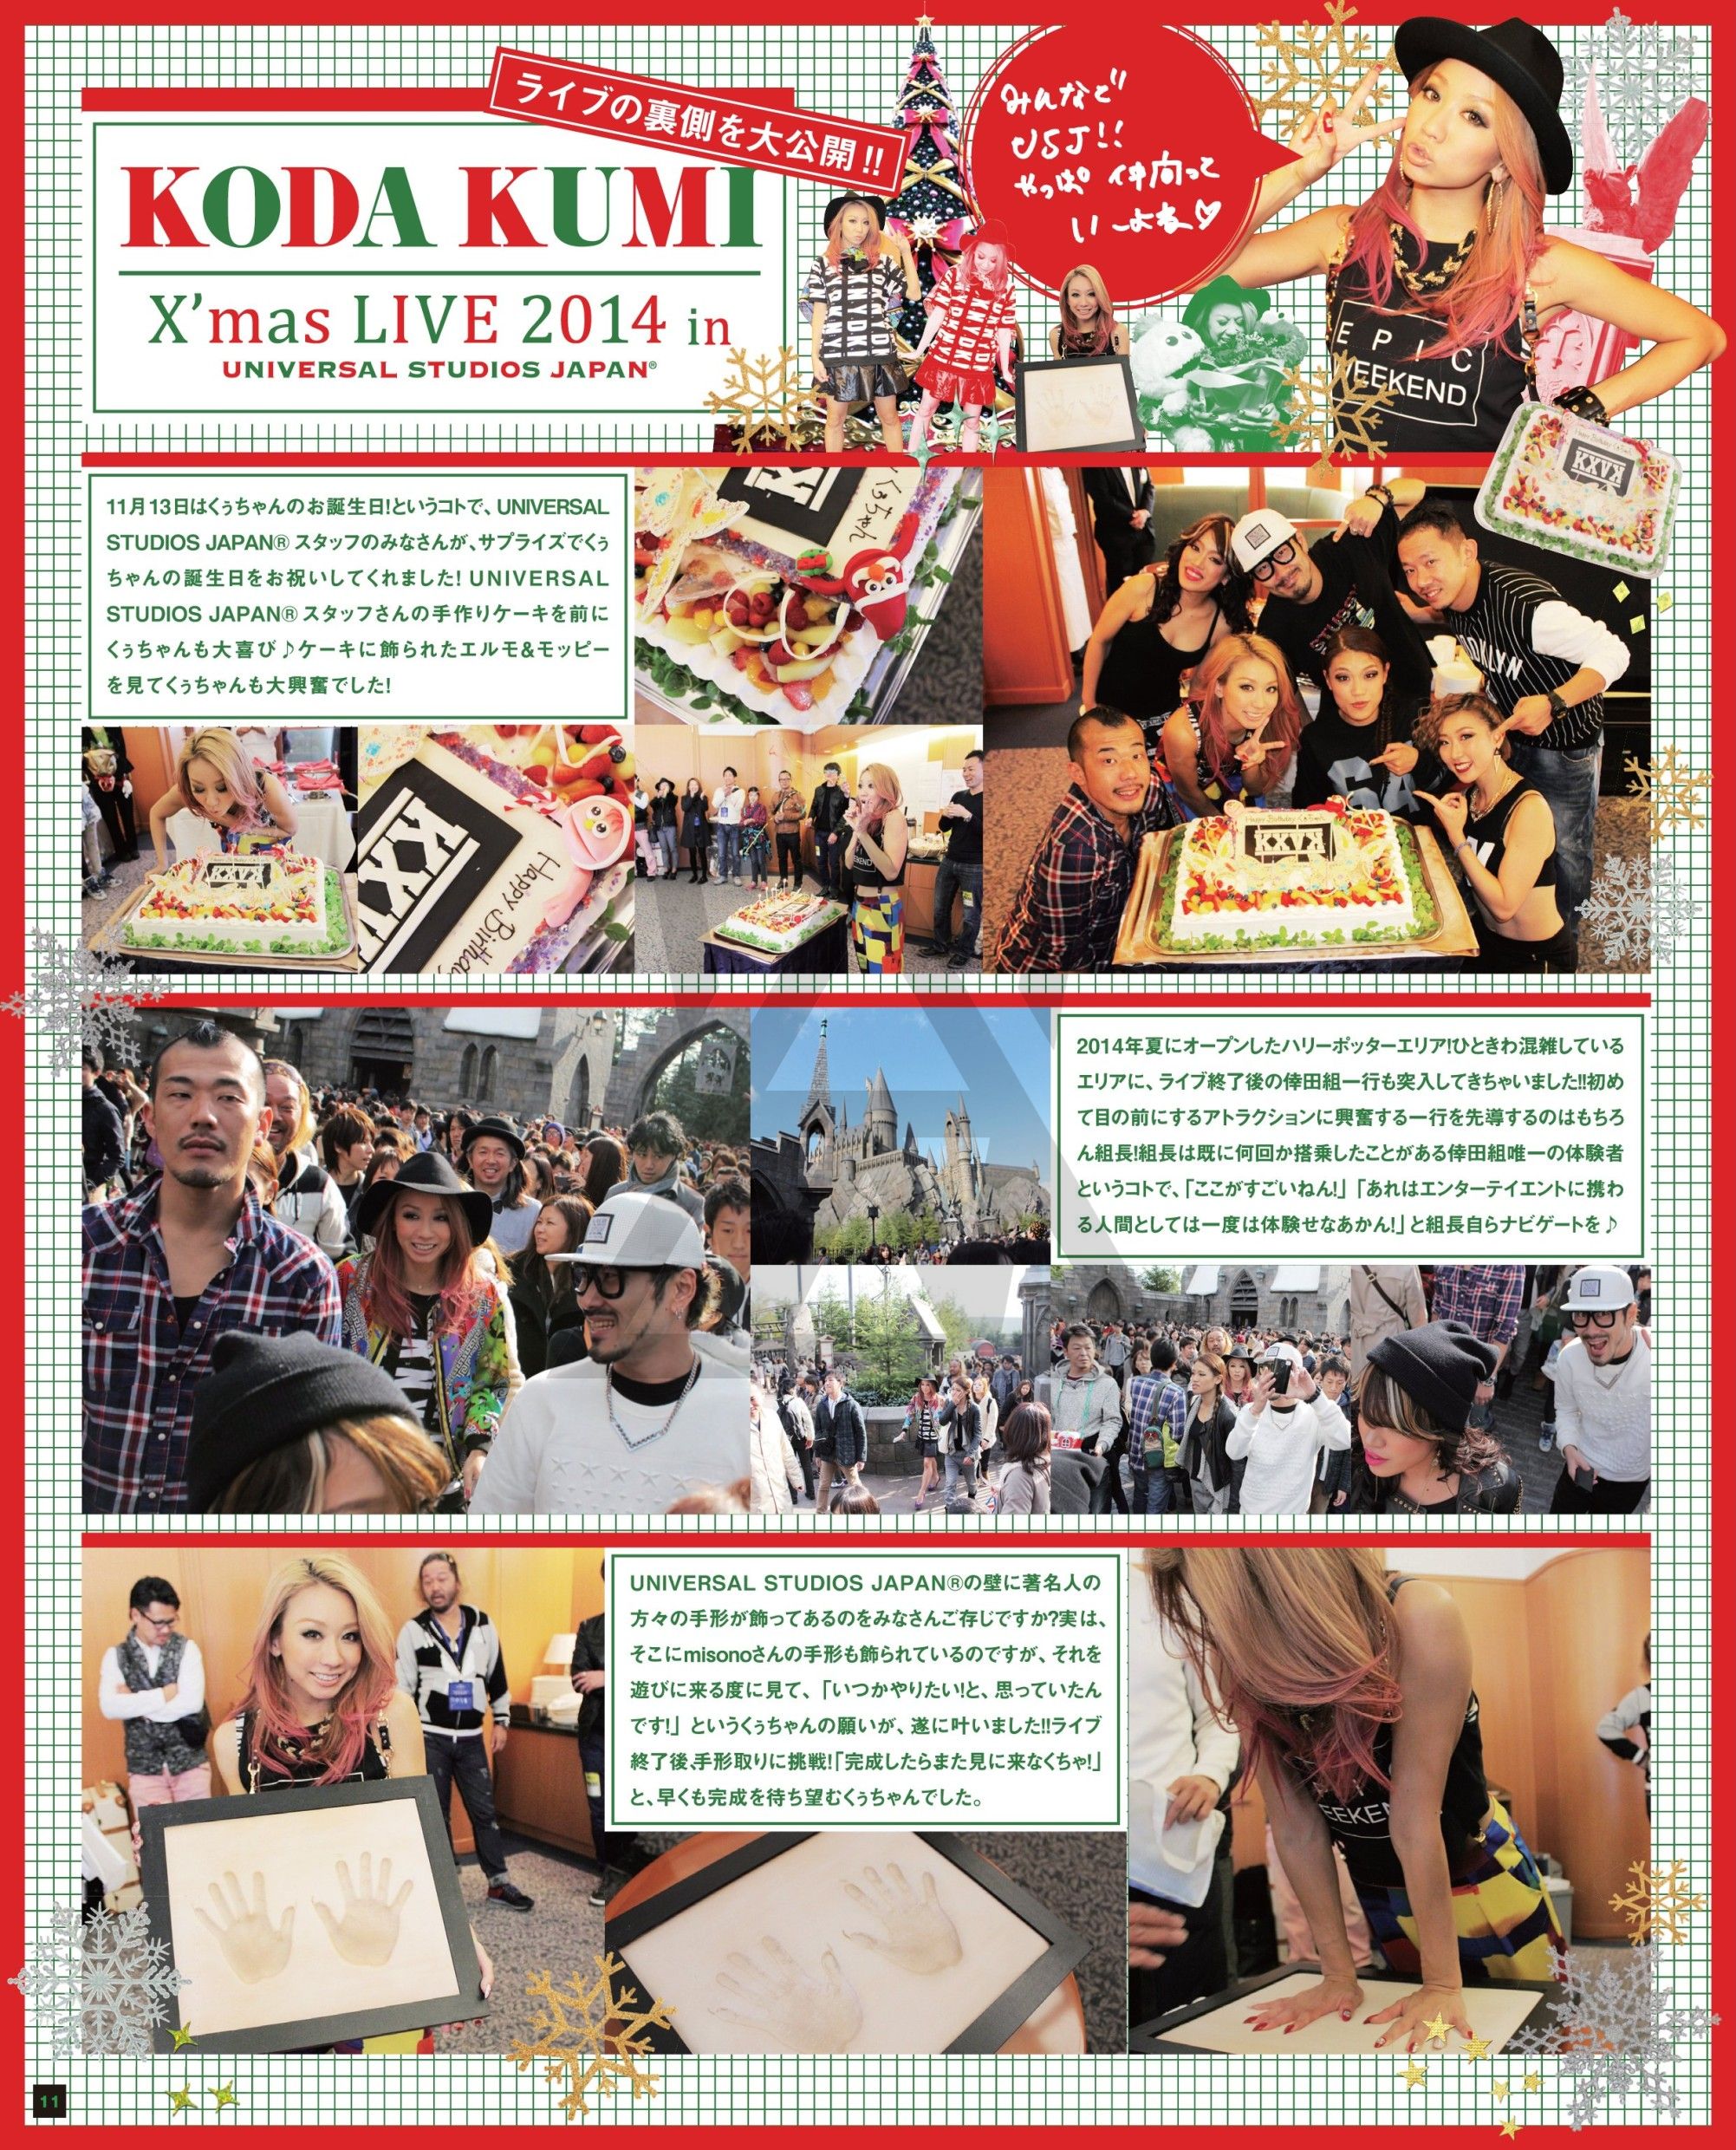 Wkkw Bon Voyage Koda Kumi Worldwide Fansite Community